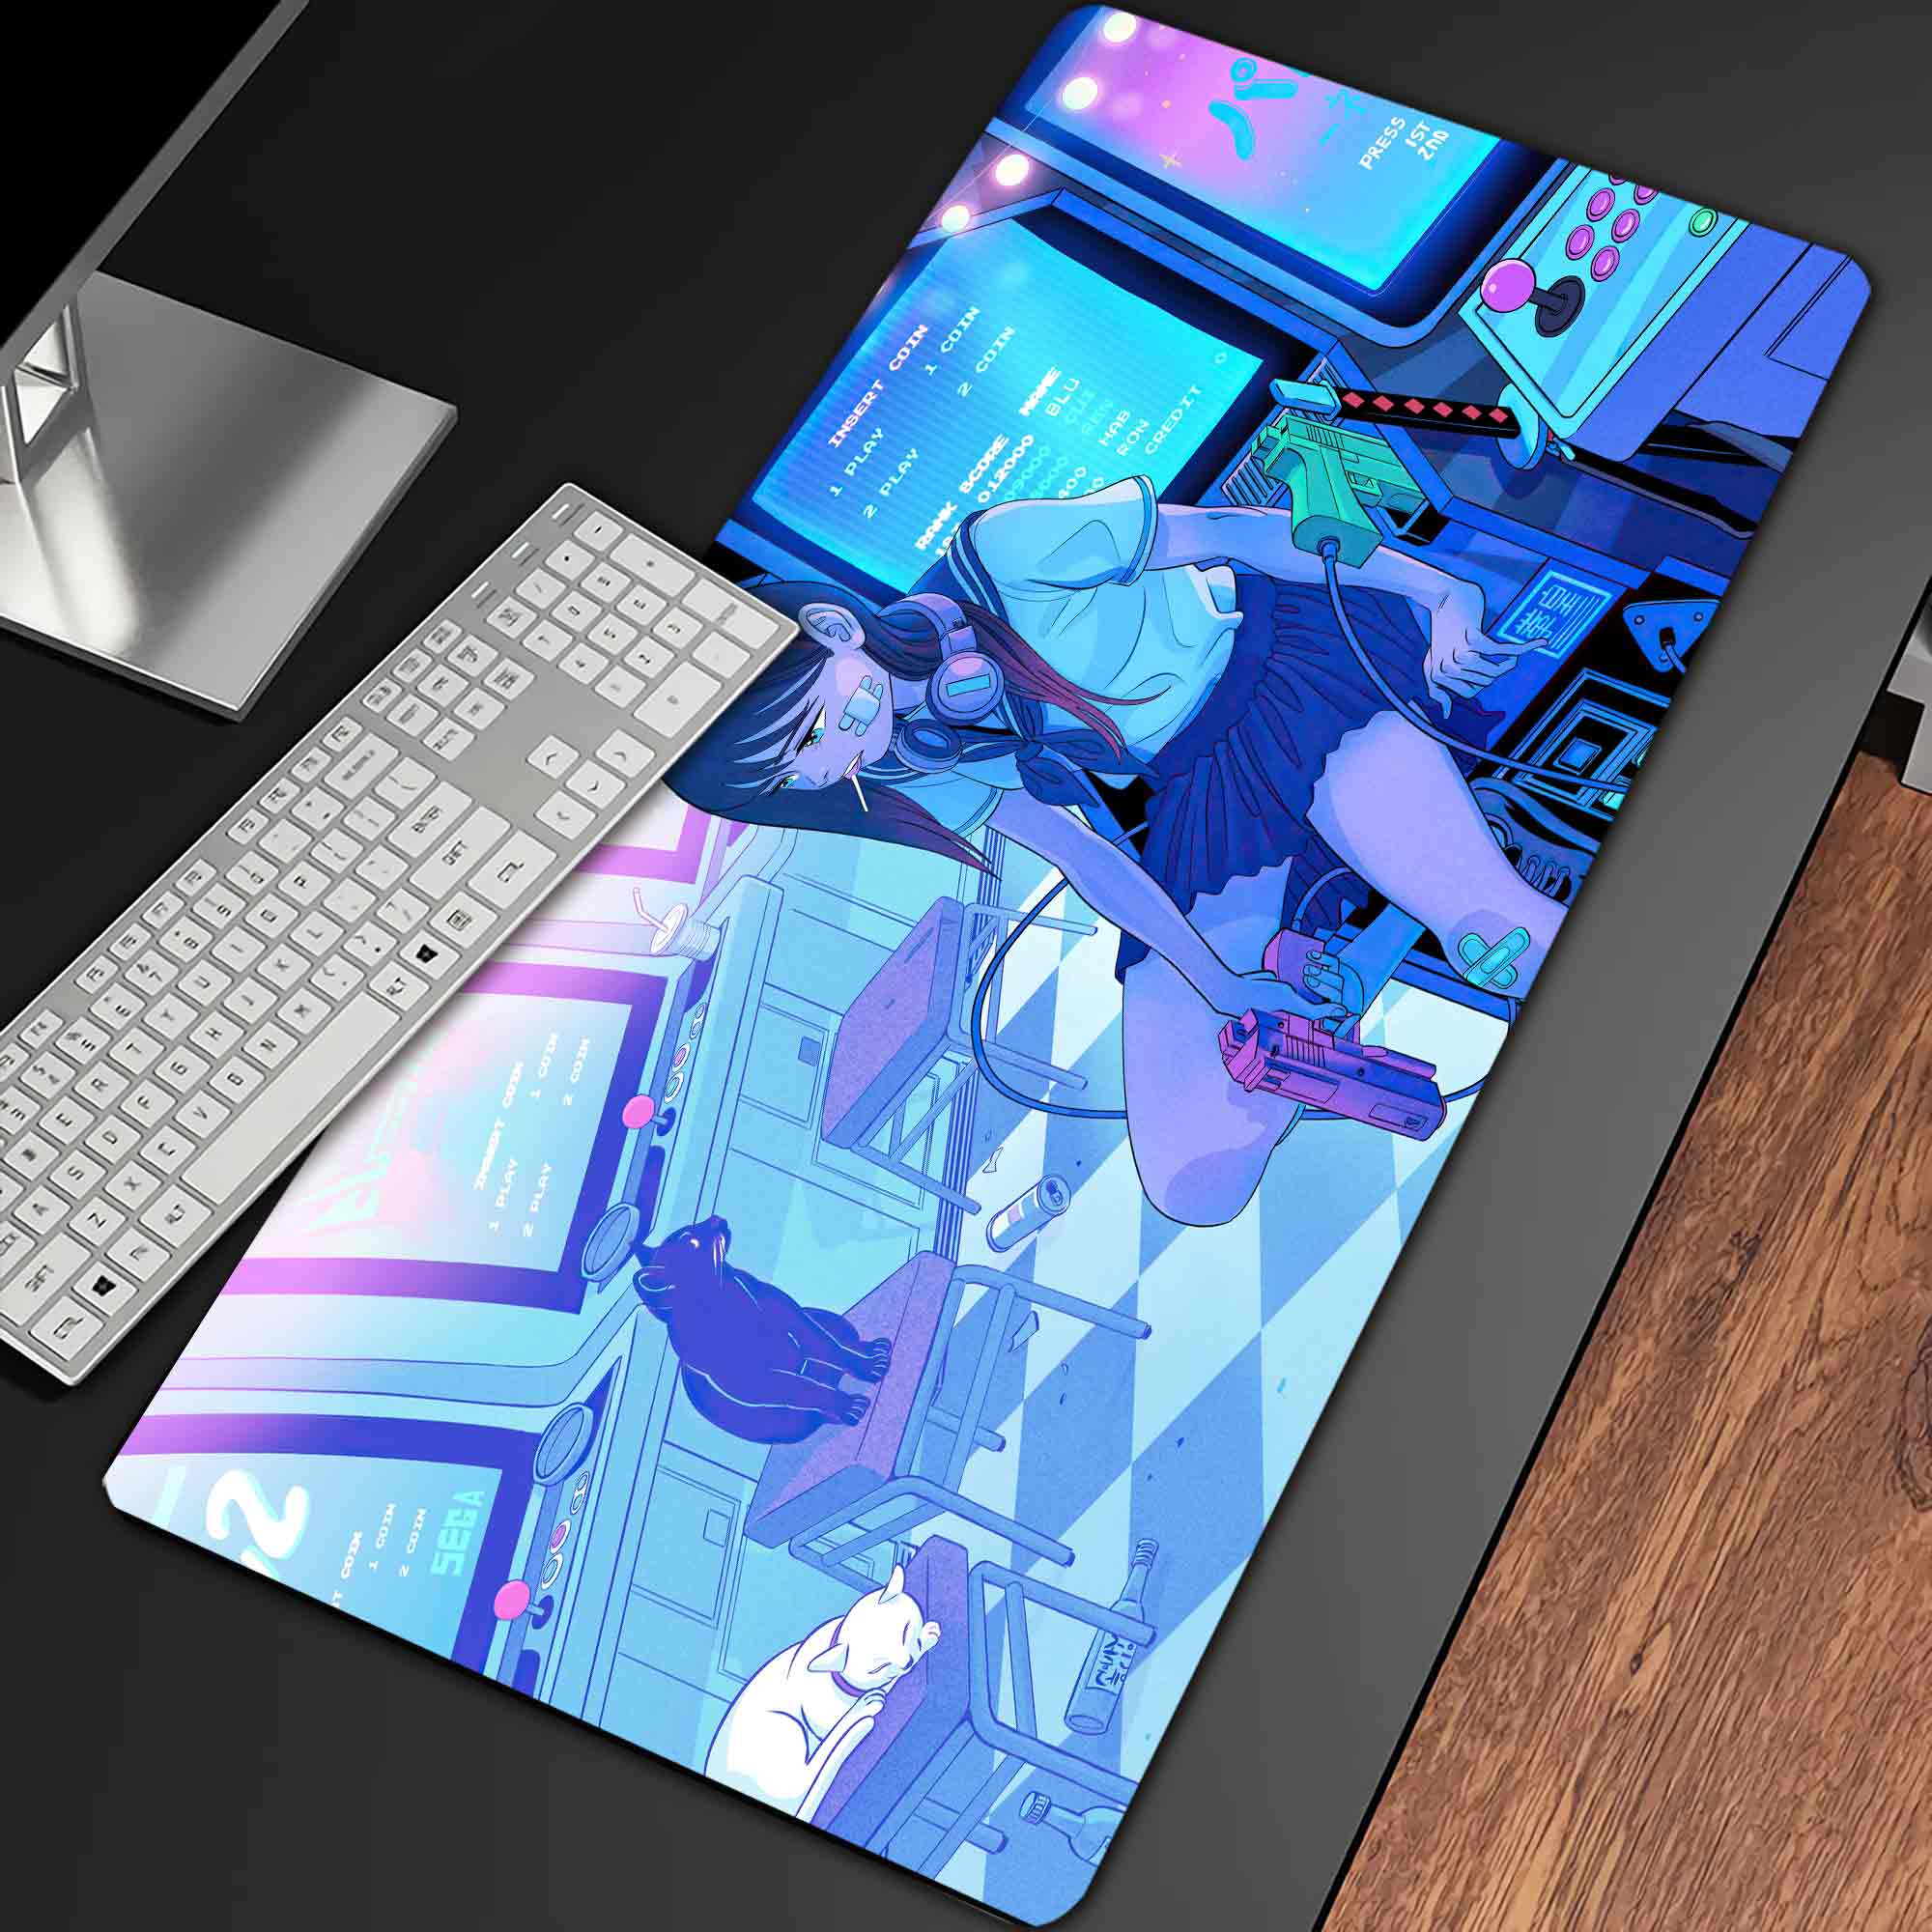 Anime Eyes Manga Panel Desk Mat and Gaming Mouse Pad